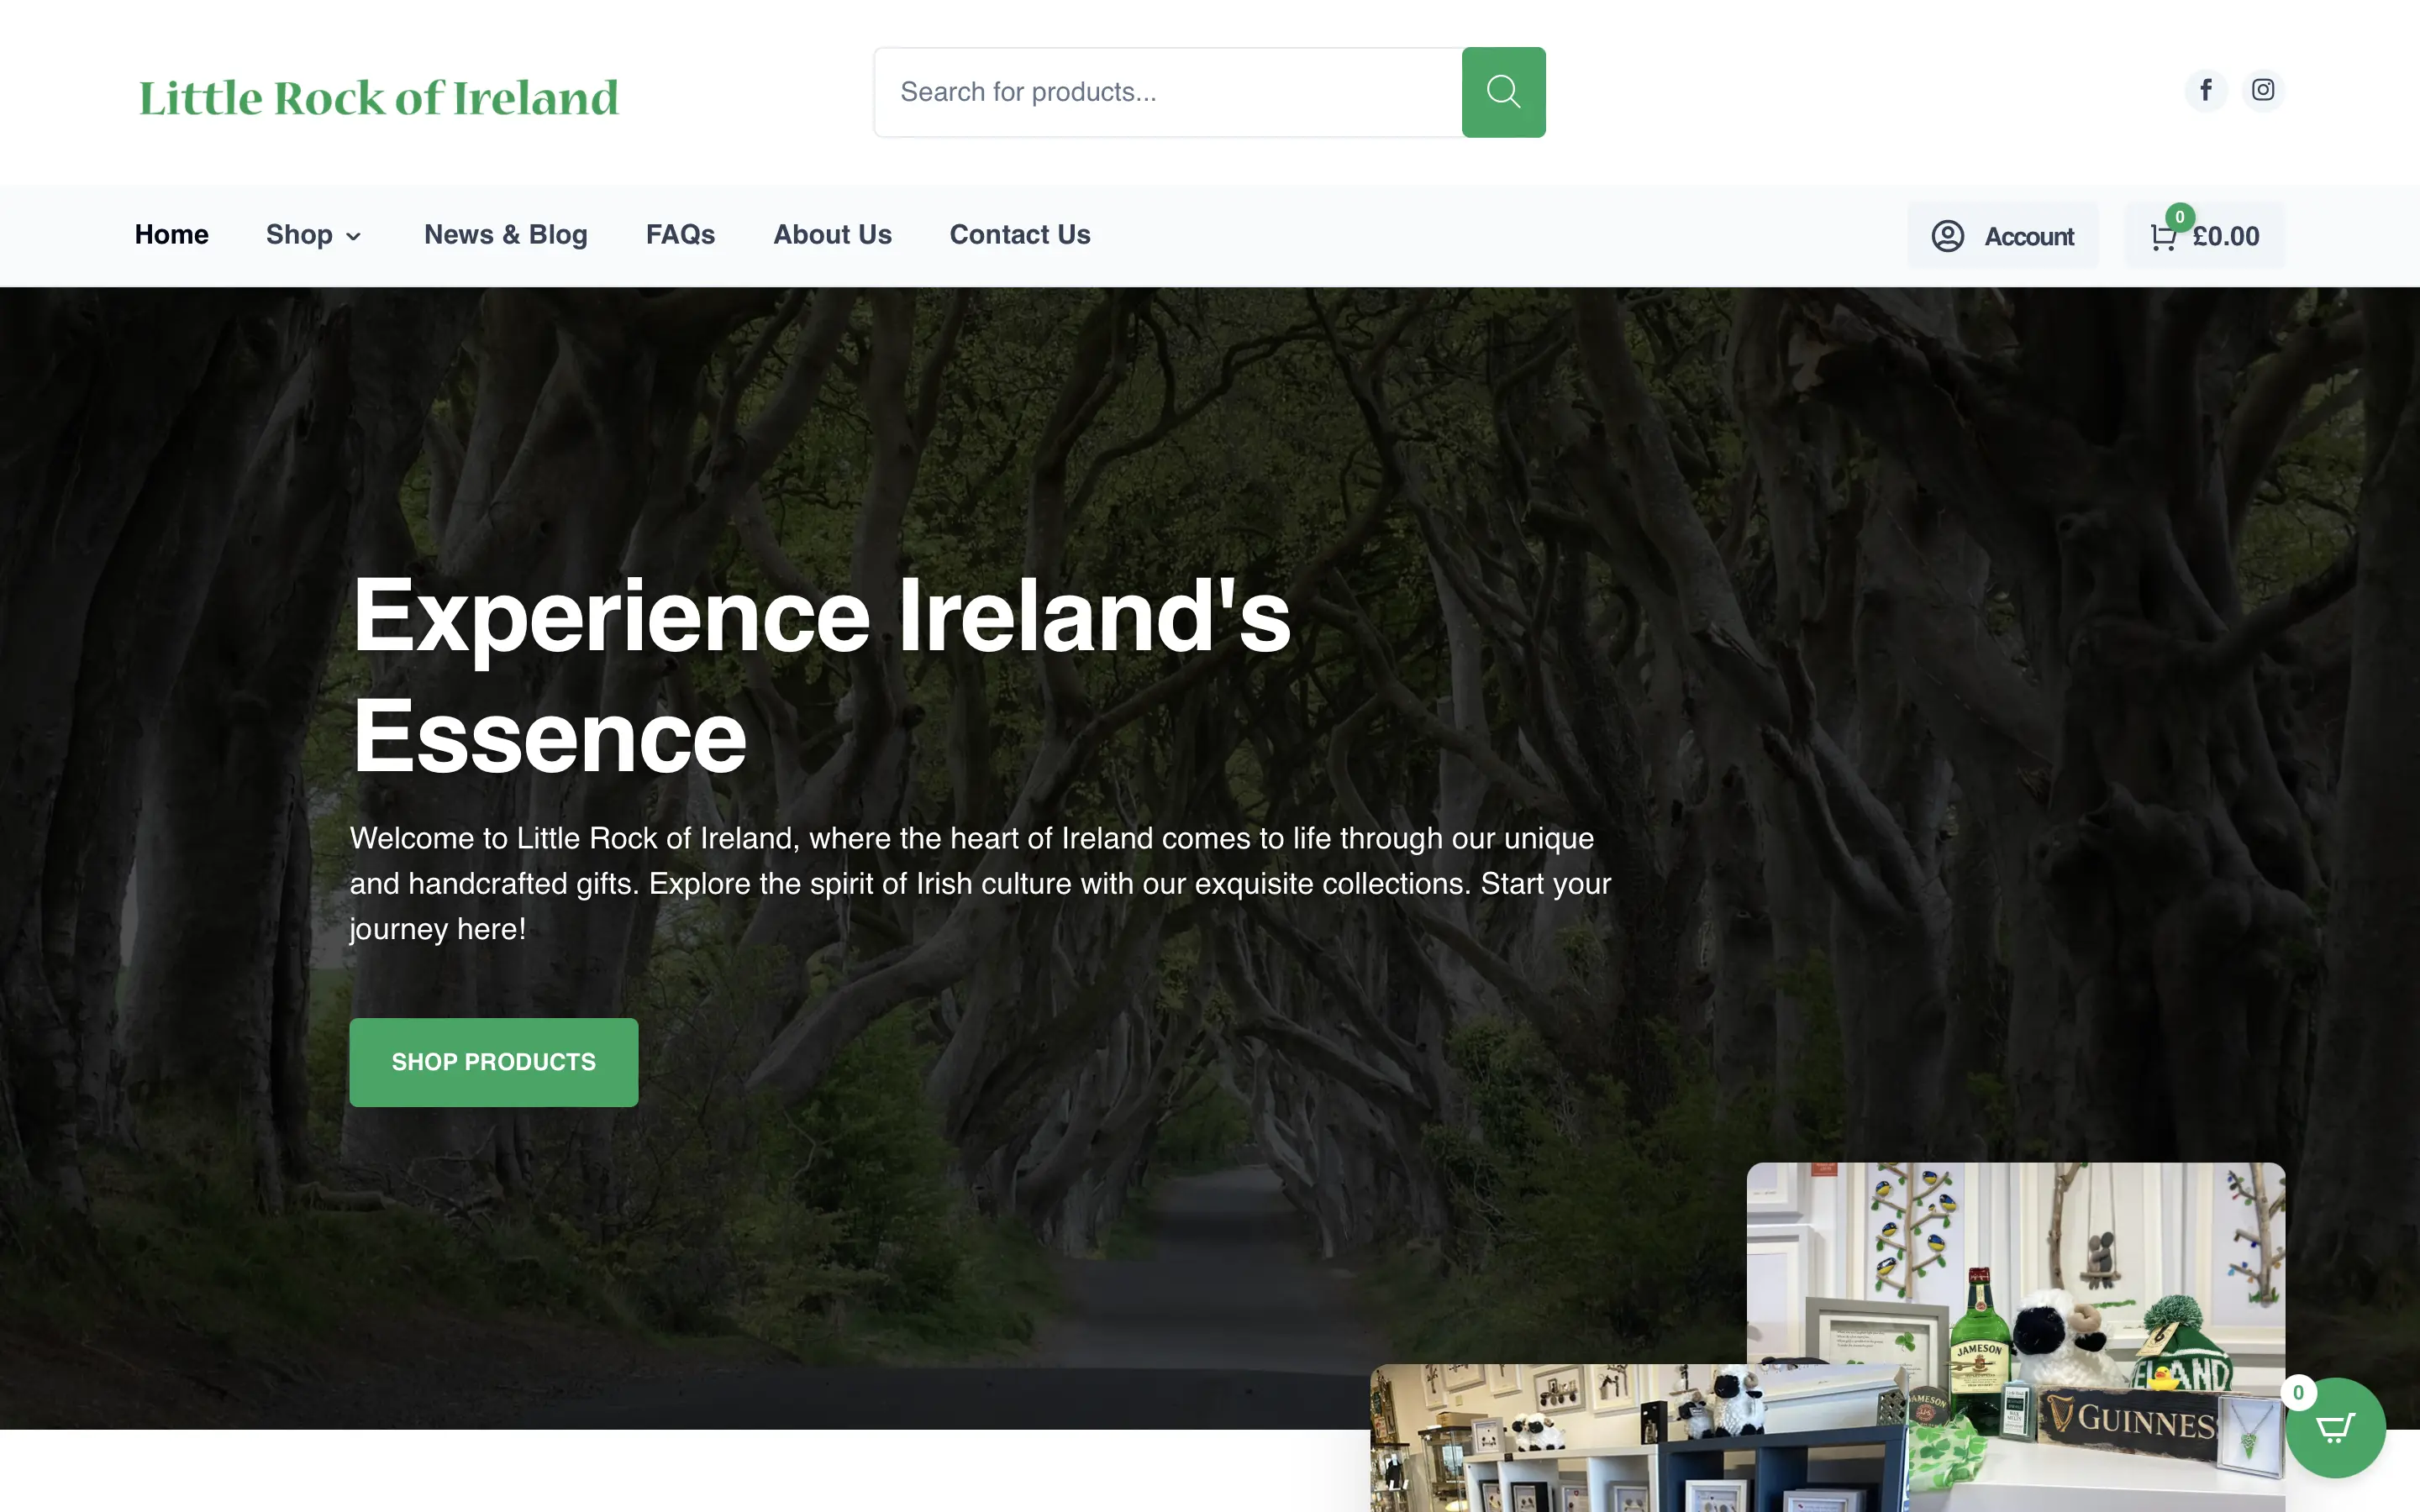 Locally-Inspired Web Design for Coleraine Companies